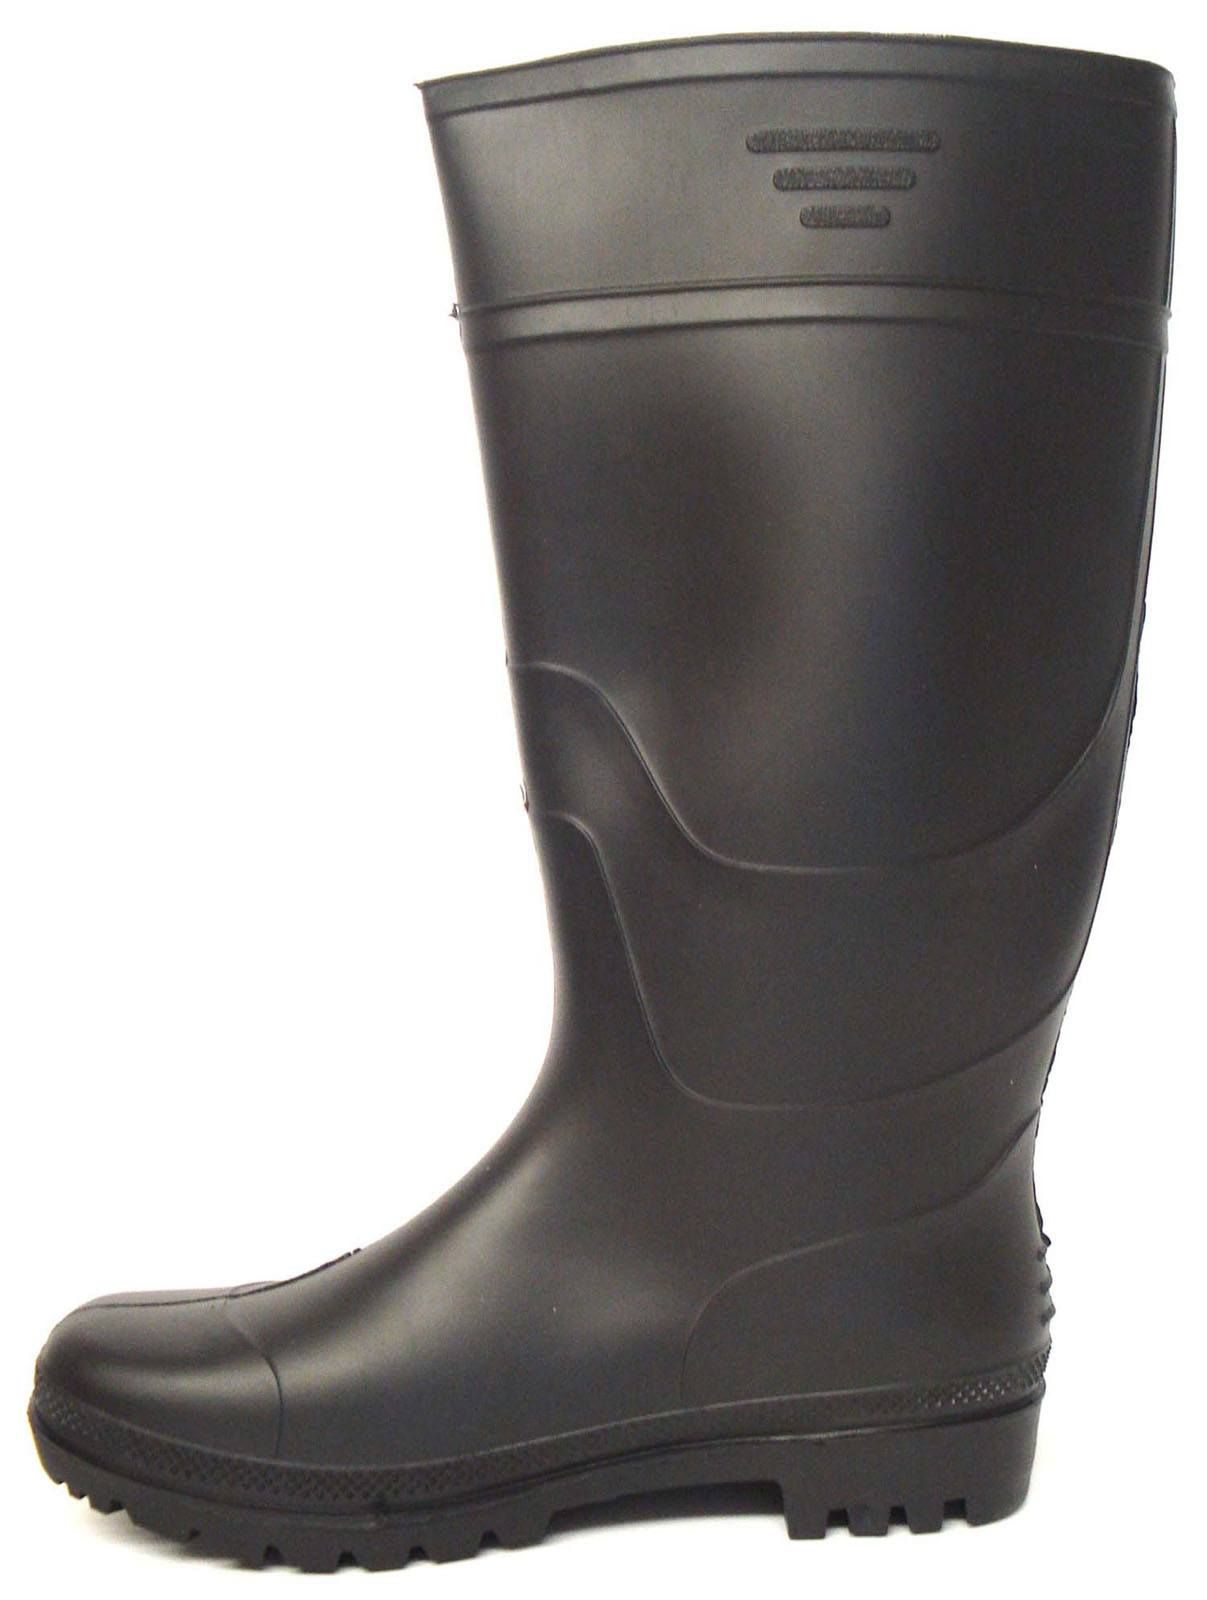 New Mens/Gents Black Full Length Rubber Waterproof Wellington Boots UK Size 